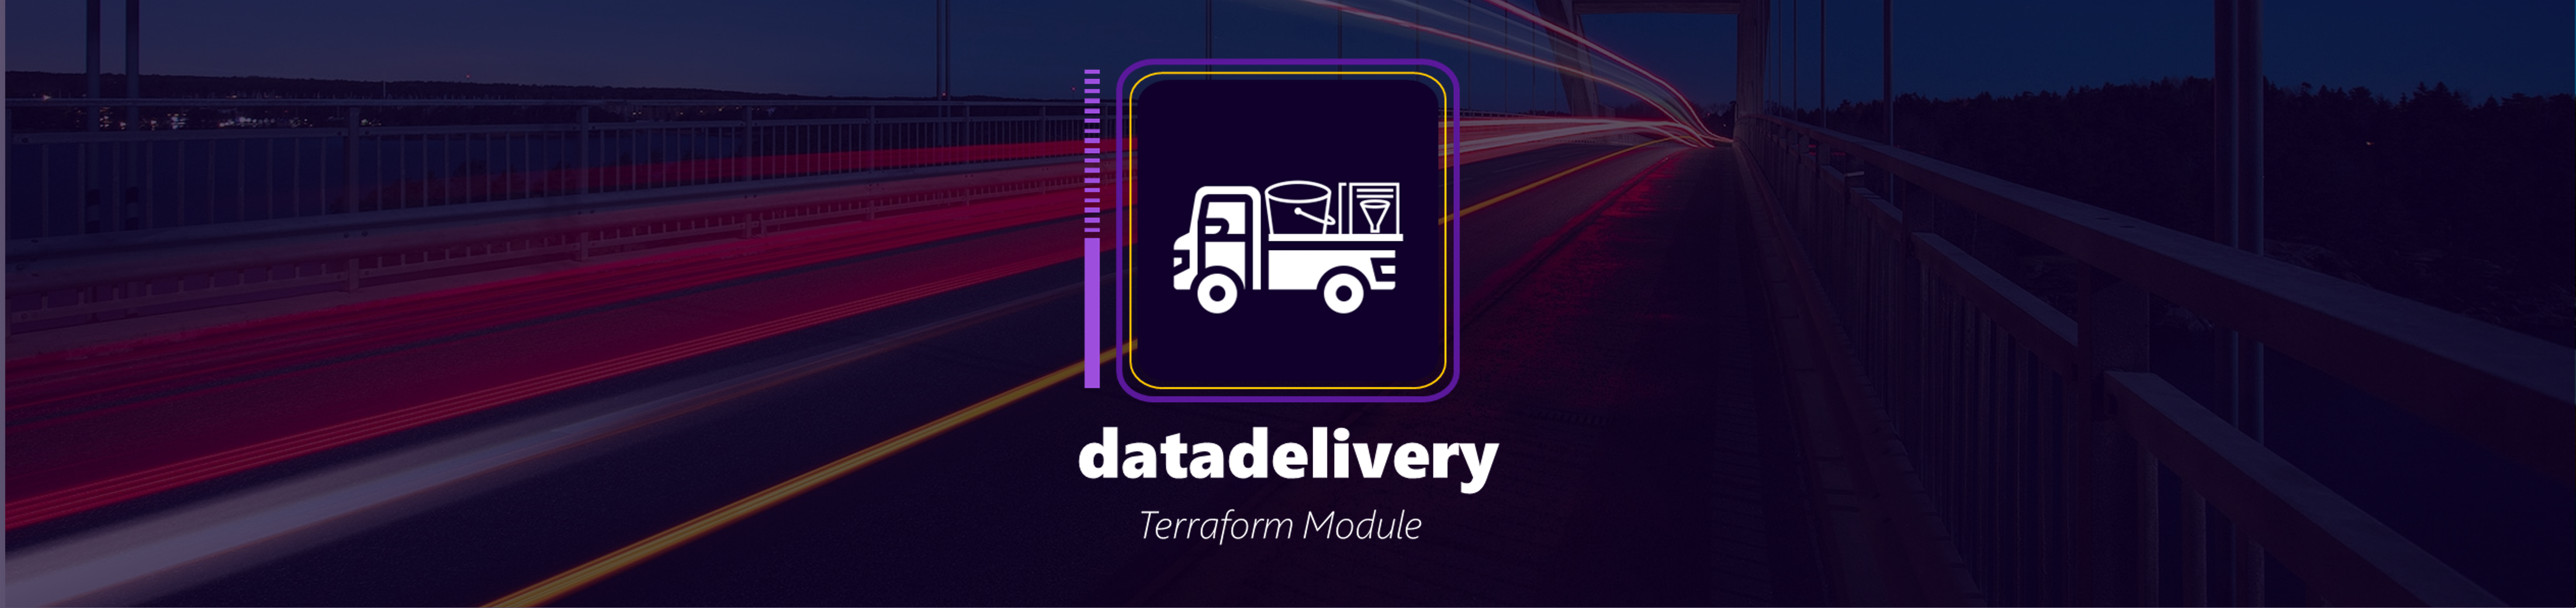 datadelivery-logo